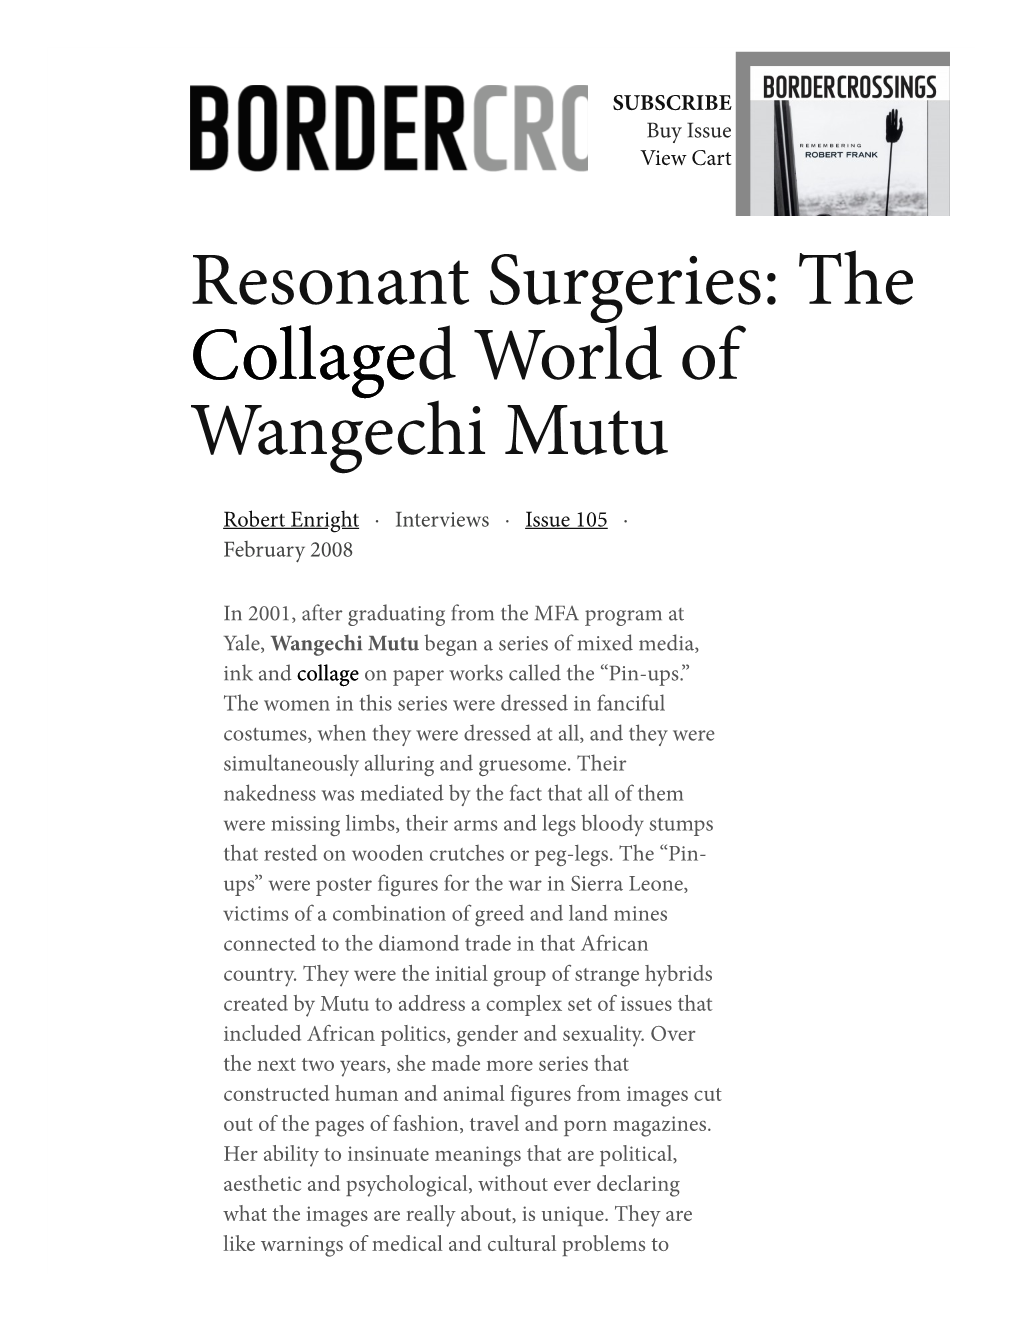 Resonant Surgeries: the Collaged World of Collage Wangechi Mutu